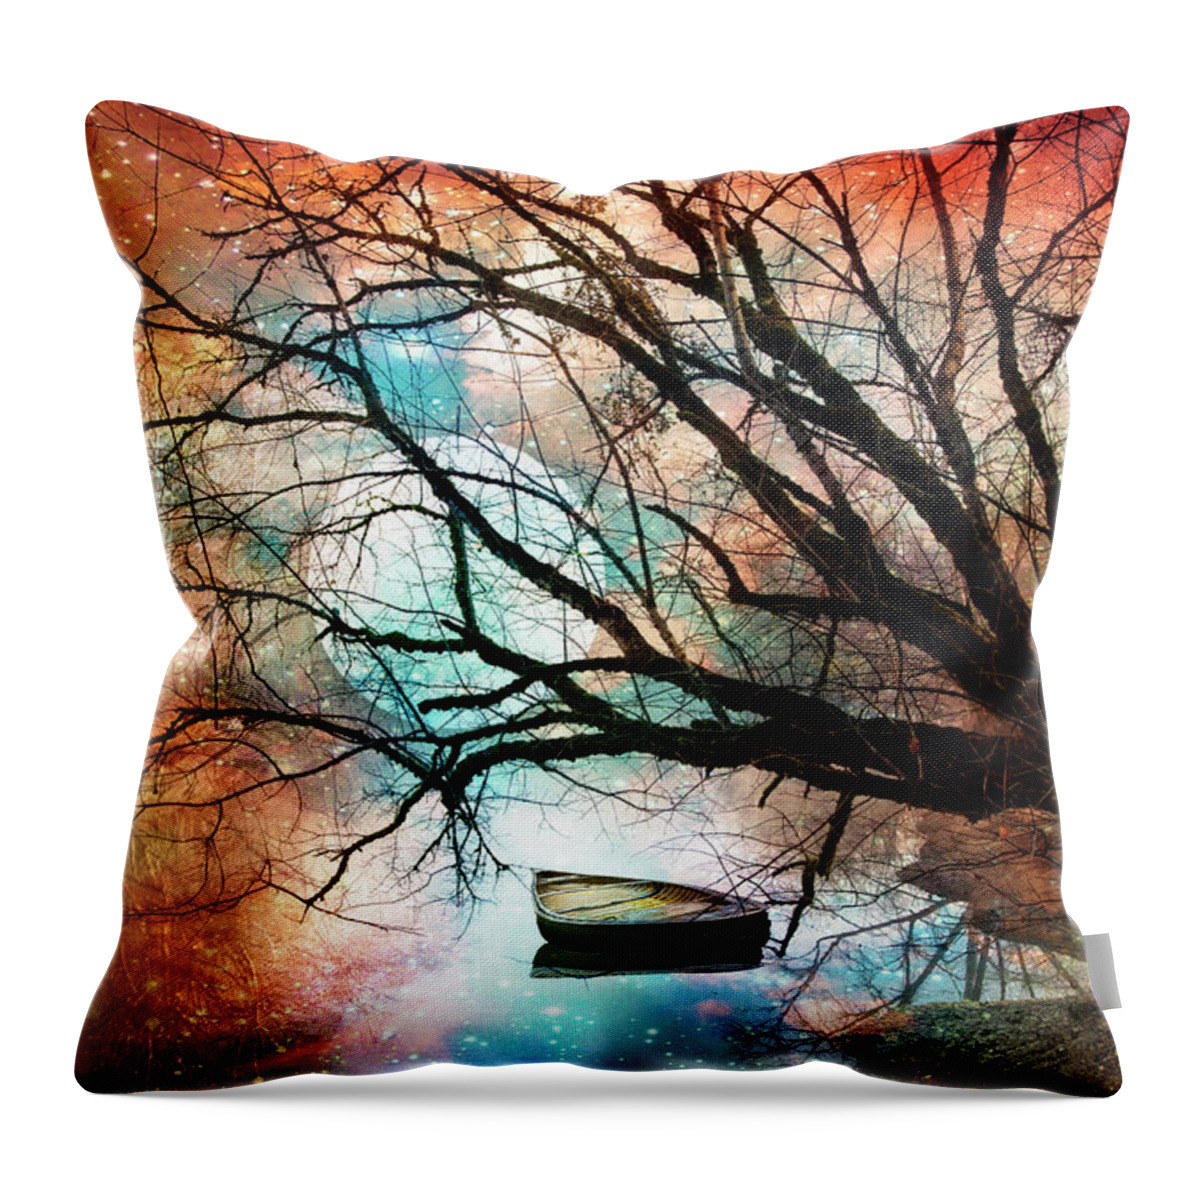 Appalachia Throw Pillow featuring the digital art Mystic Moon by Debra and Dave Vanderlaan